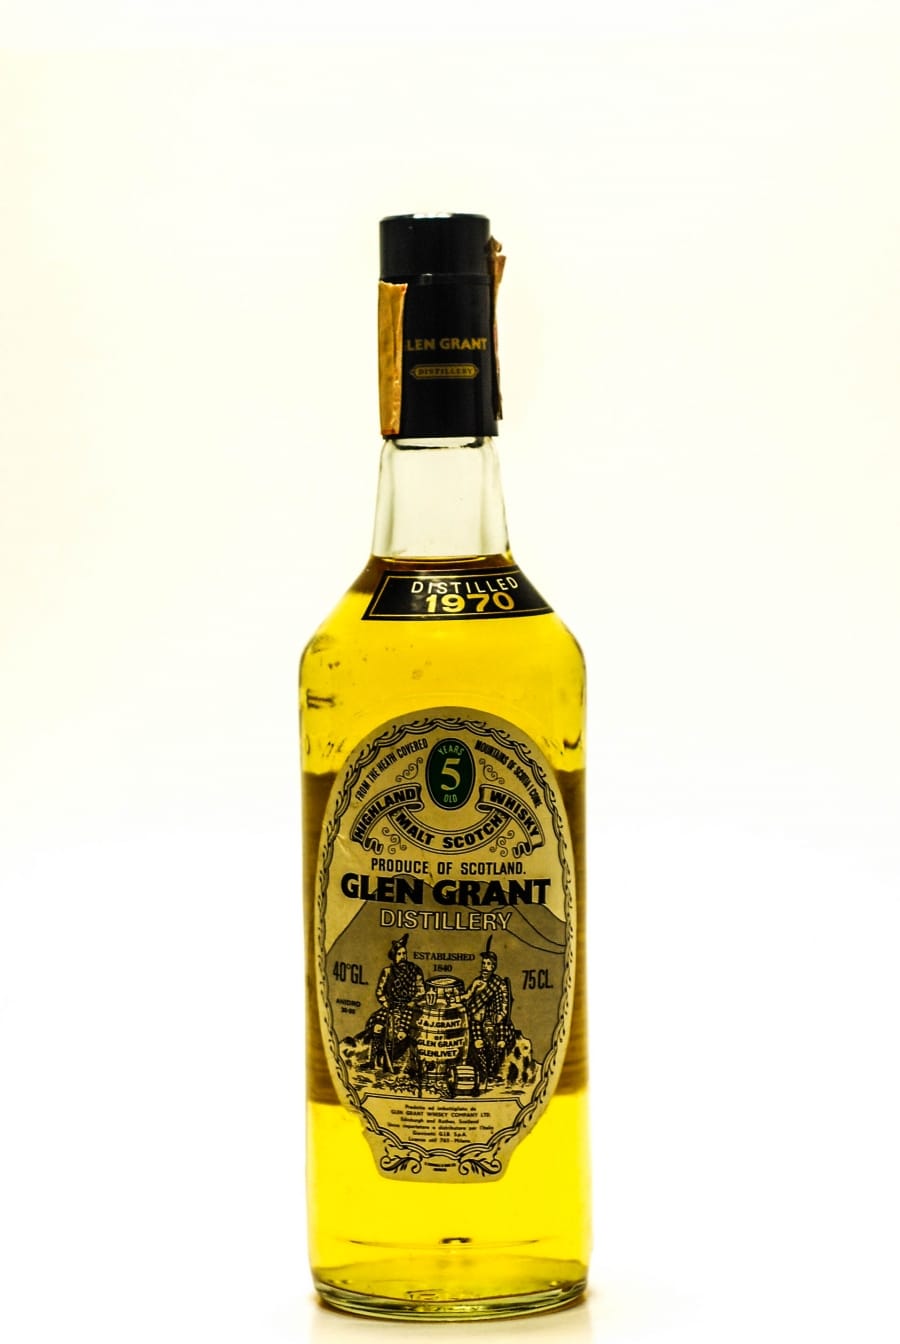 Glen Grant - Glen Grant 5 years old Seagram Import Italy Distilled 1970 Botteld 1975 40% 1970 Perfect